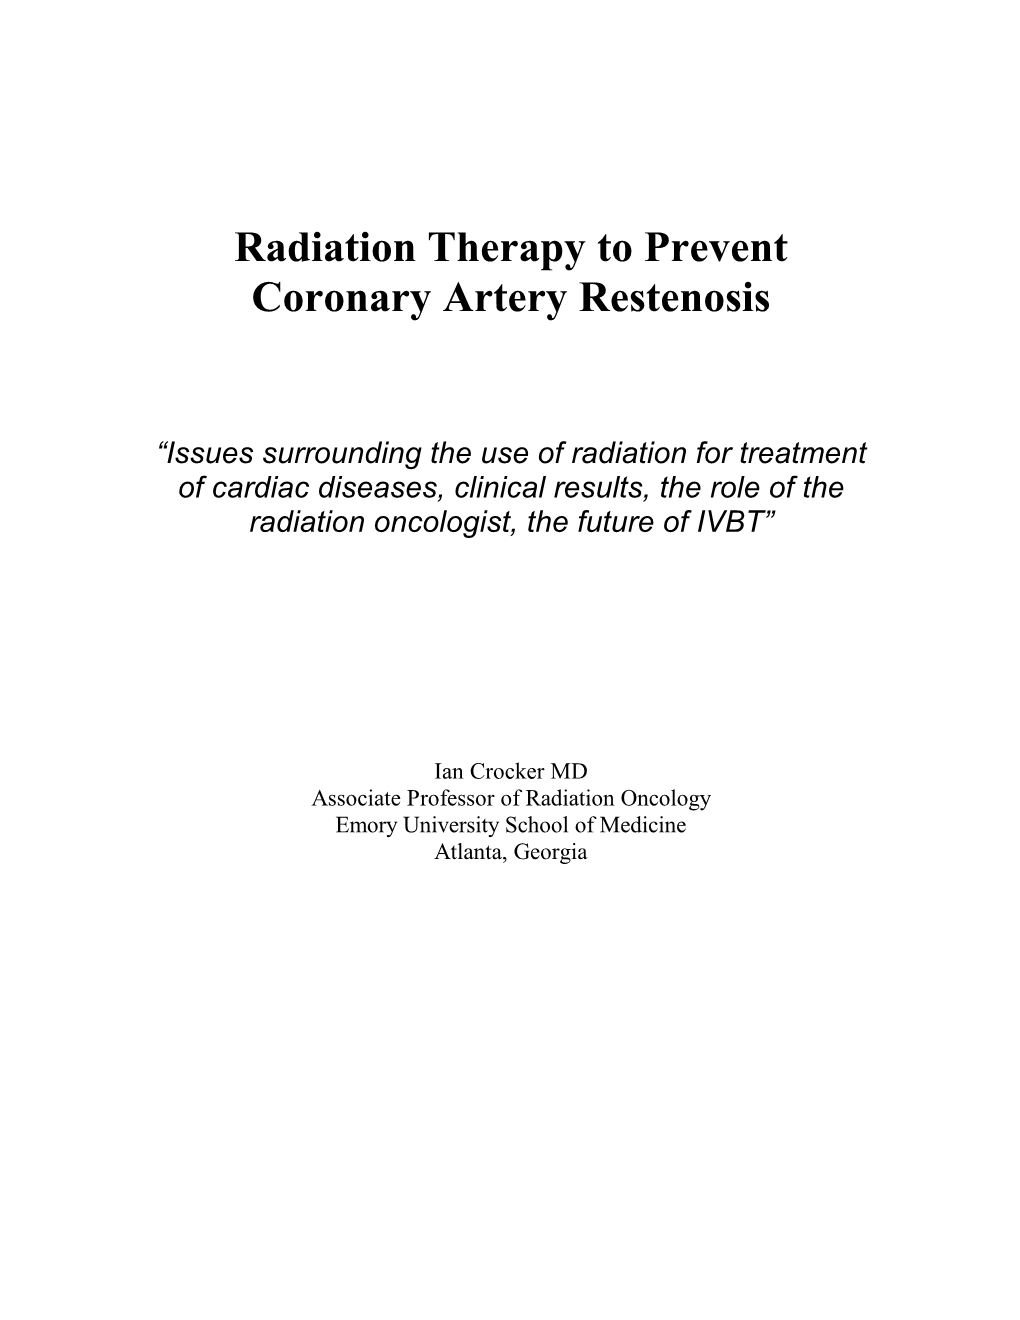 Radiation Therapy to Prevent Coronary Artery Restenosis